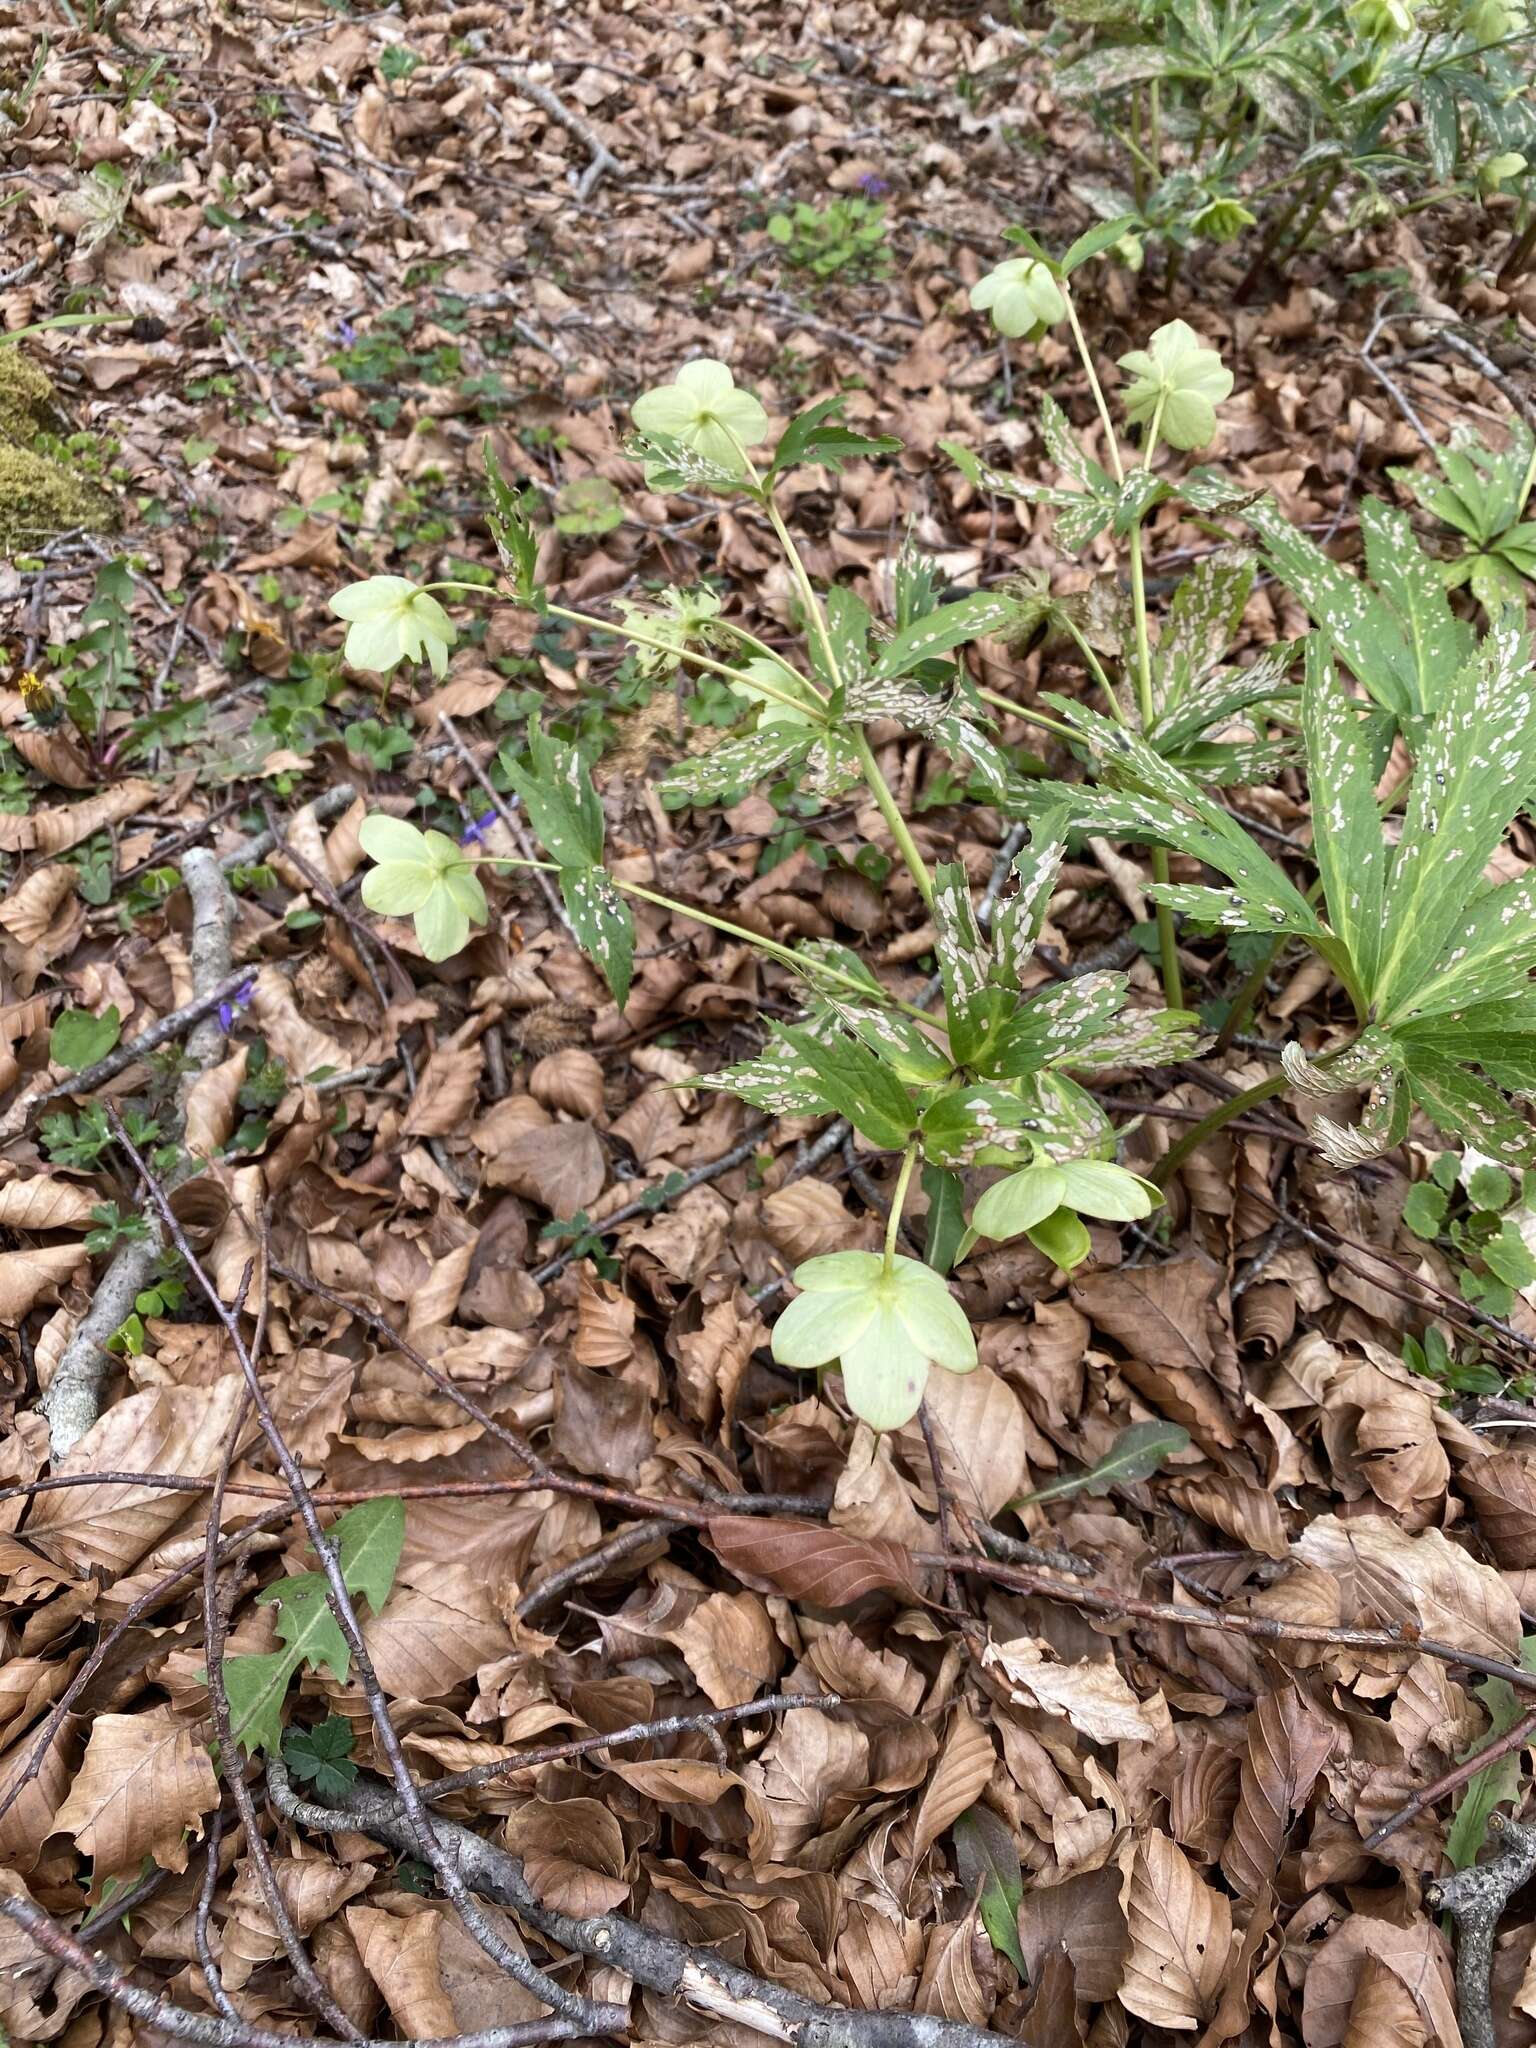 Image of Helleborus viridis subsp. occidentalis (Reuter) Schifner